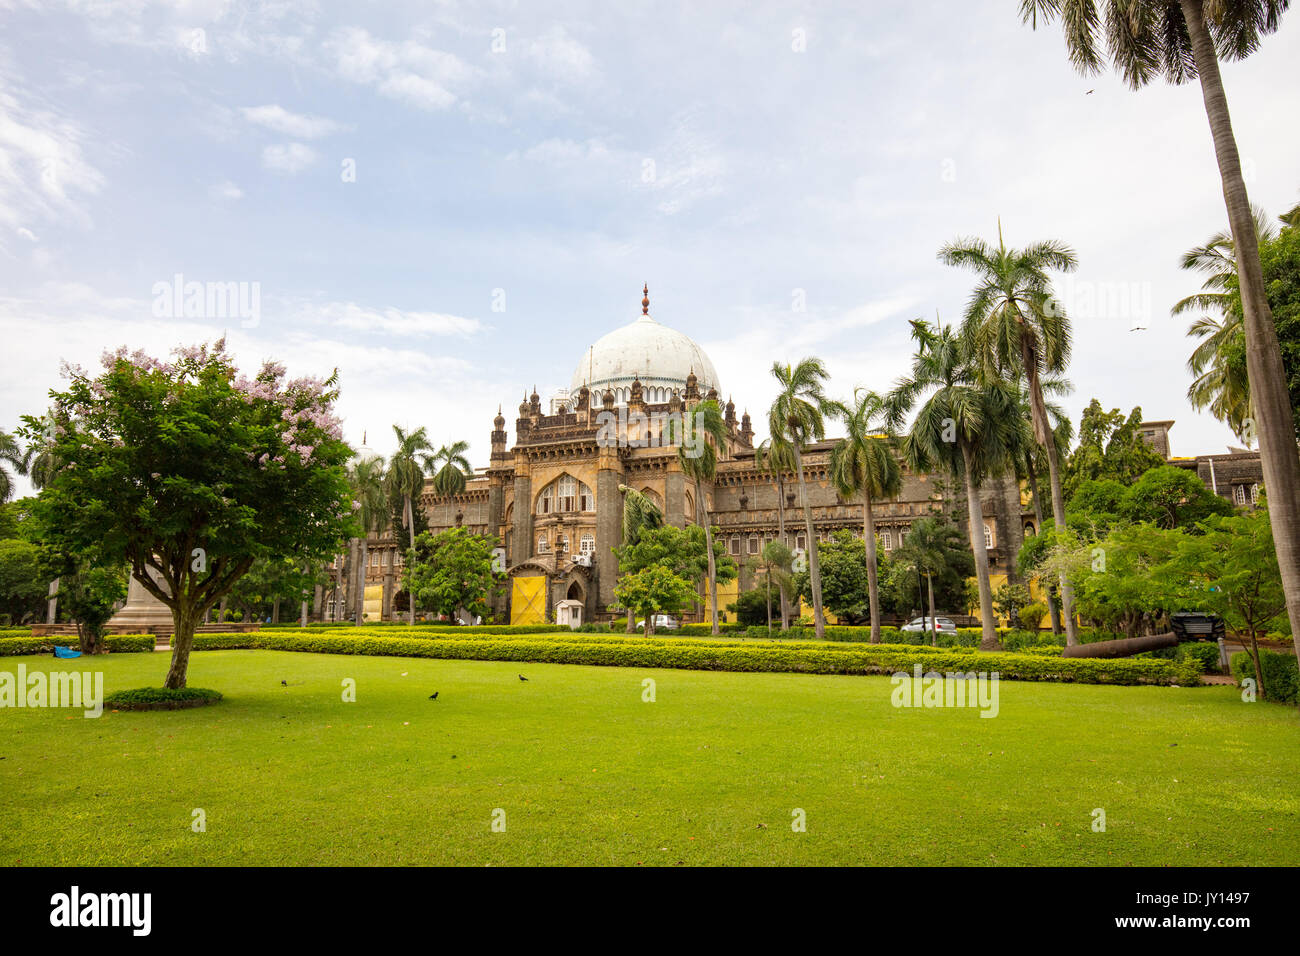 Chhatrapati Shivaji Maharaj Vastu Sangrahalaya, formerly known as Prince of Wales Museum in Mumbai, India Stock Photo